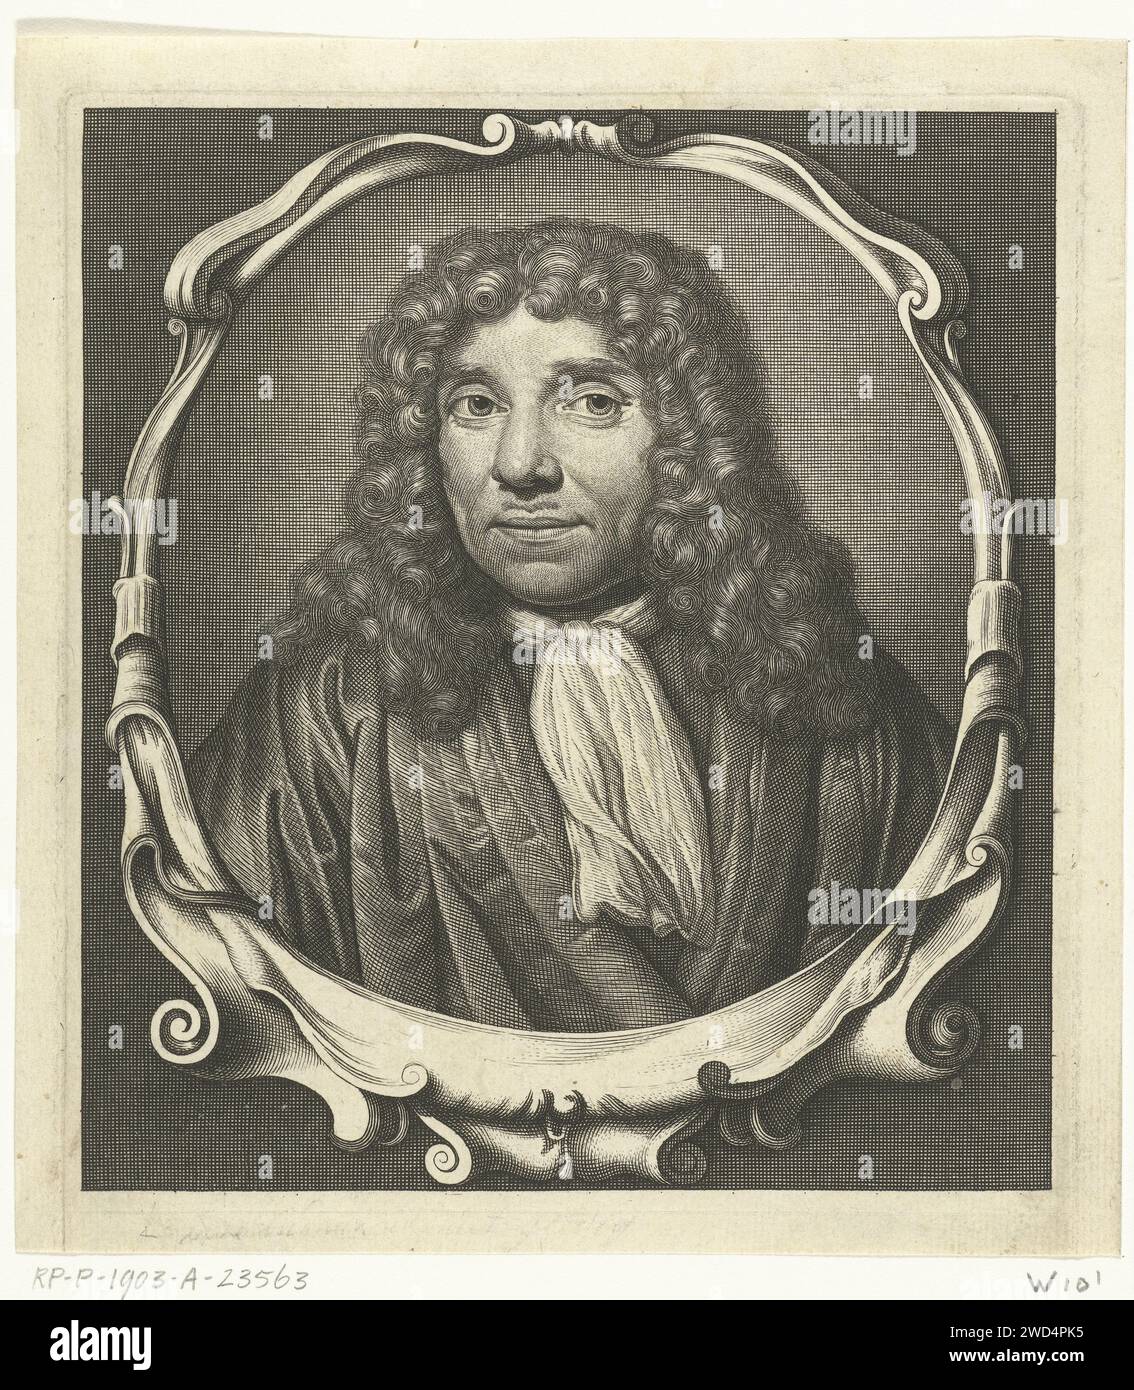 Portrait of Antonie van Leeuwenhoek, Abraham de Blois, after Jan Verkolje (I), 1679 - 1717 print Portrait of Antonie van Leeuwenhoek, bust in oval frame with lobe ornament. Amsterdam paper engraving Stock Photo